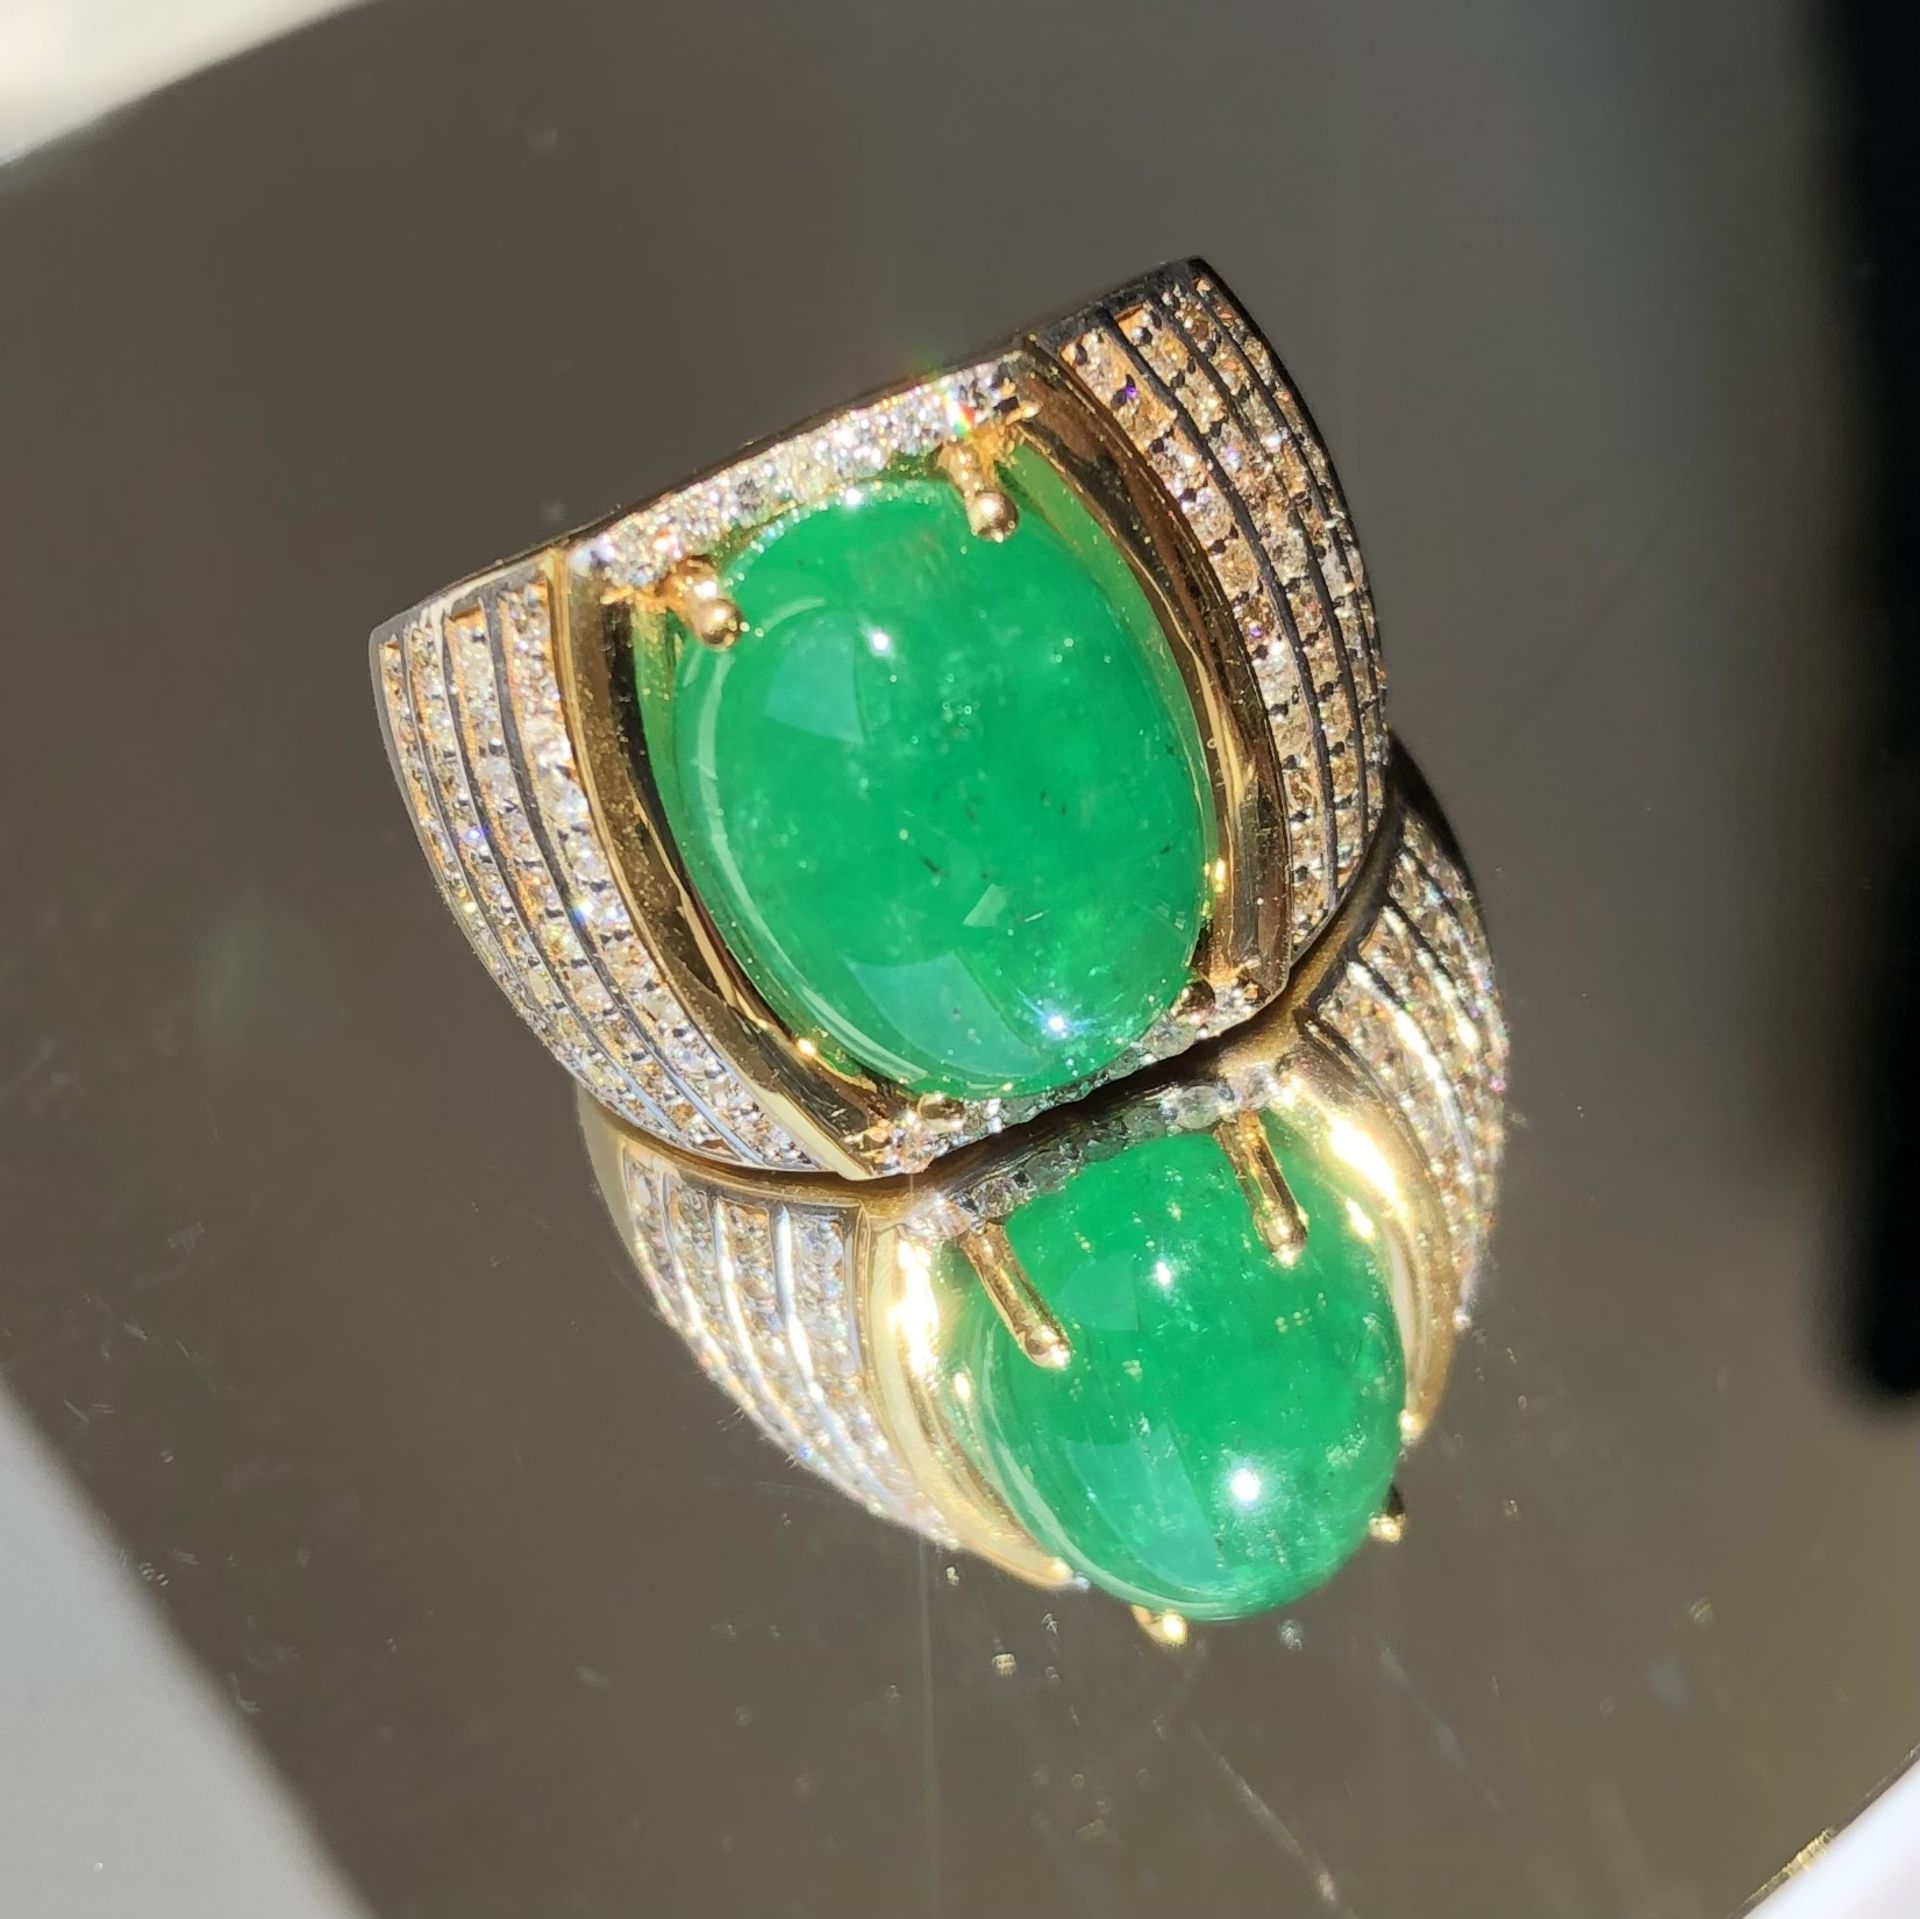 Beautiful 10.97 Carat Natural Emerald Man Ring With Natural Diamonds and 18k Gold - Image 6 of 7